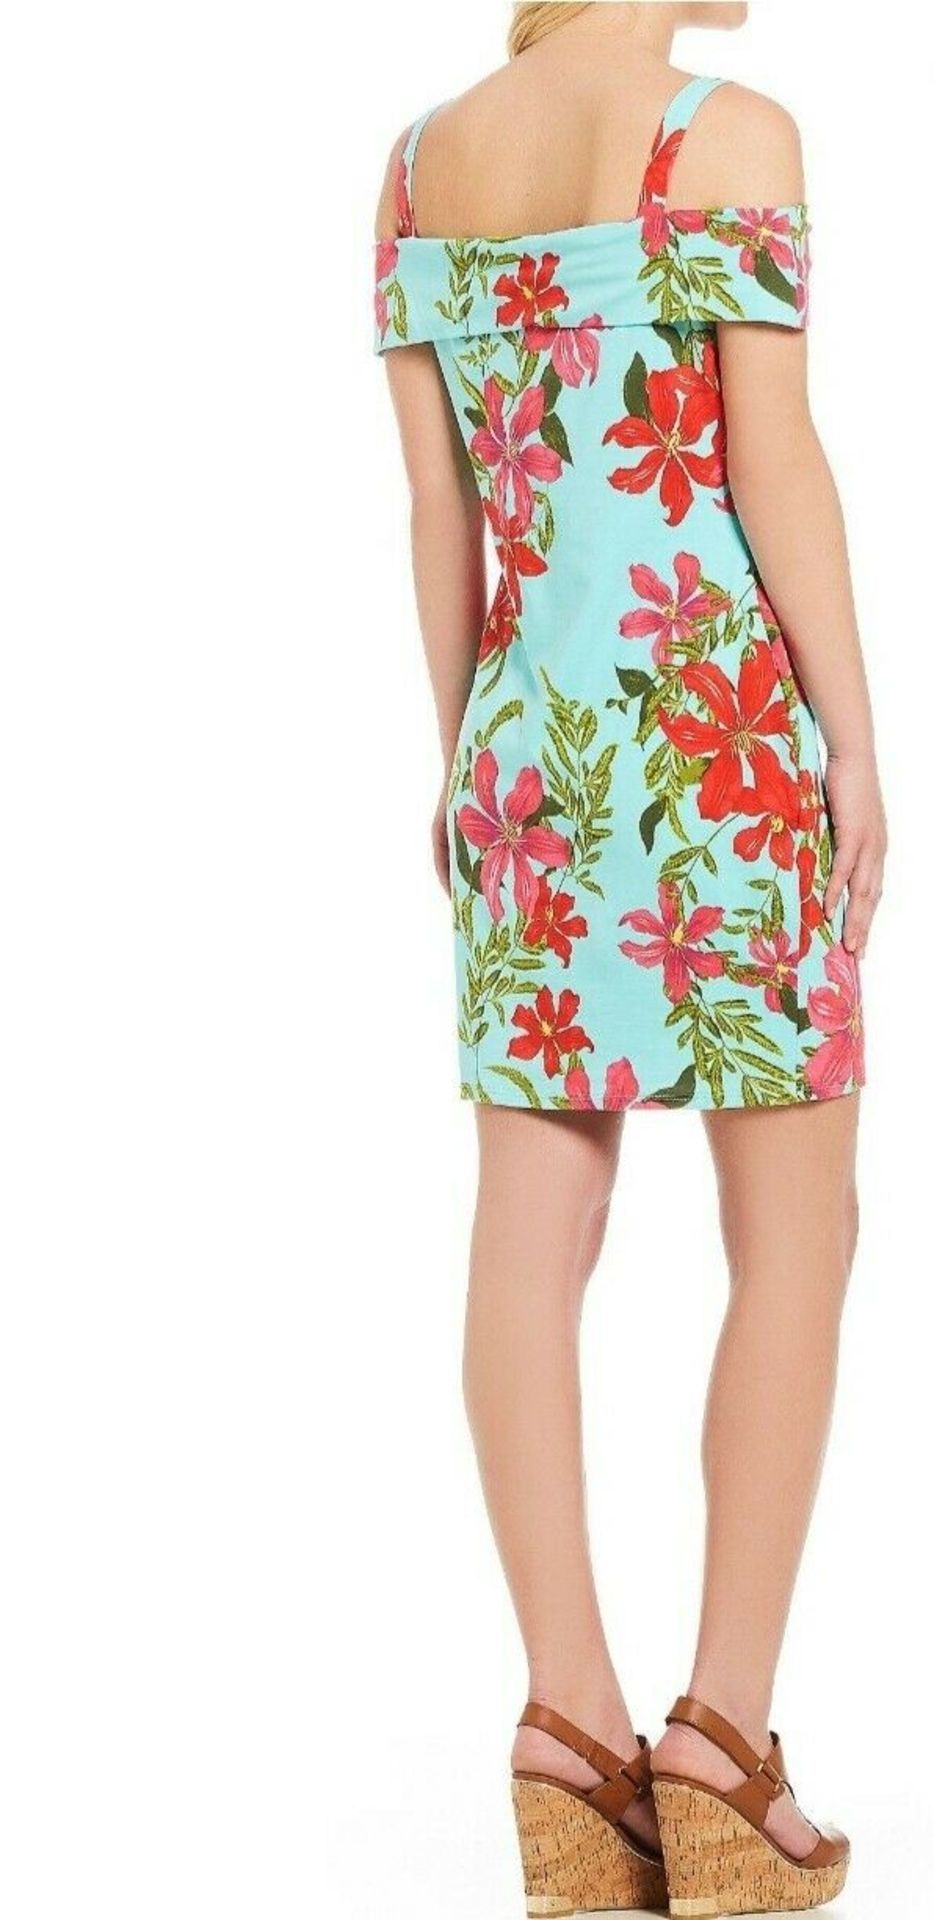 Guess Aqua Pink Cold - Shoulder Floral Print Bodycon Dress - Size S - Image 2 of 2